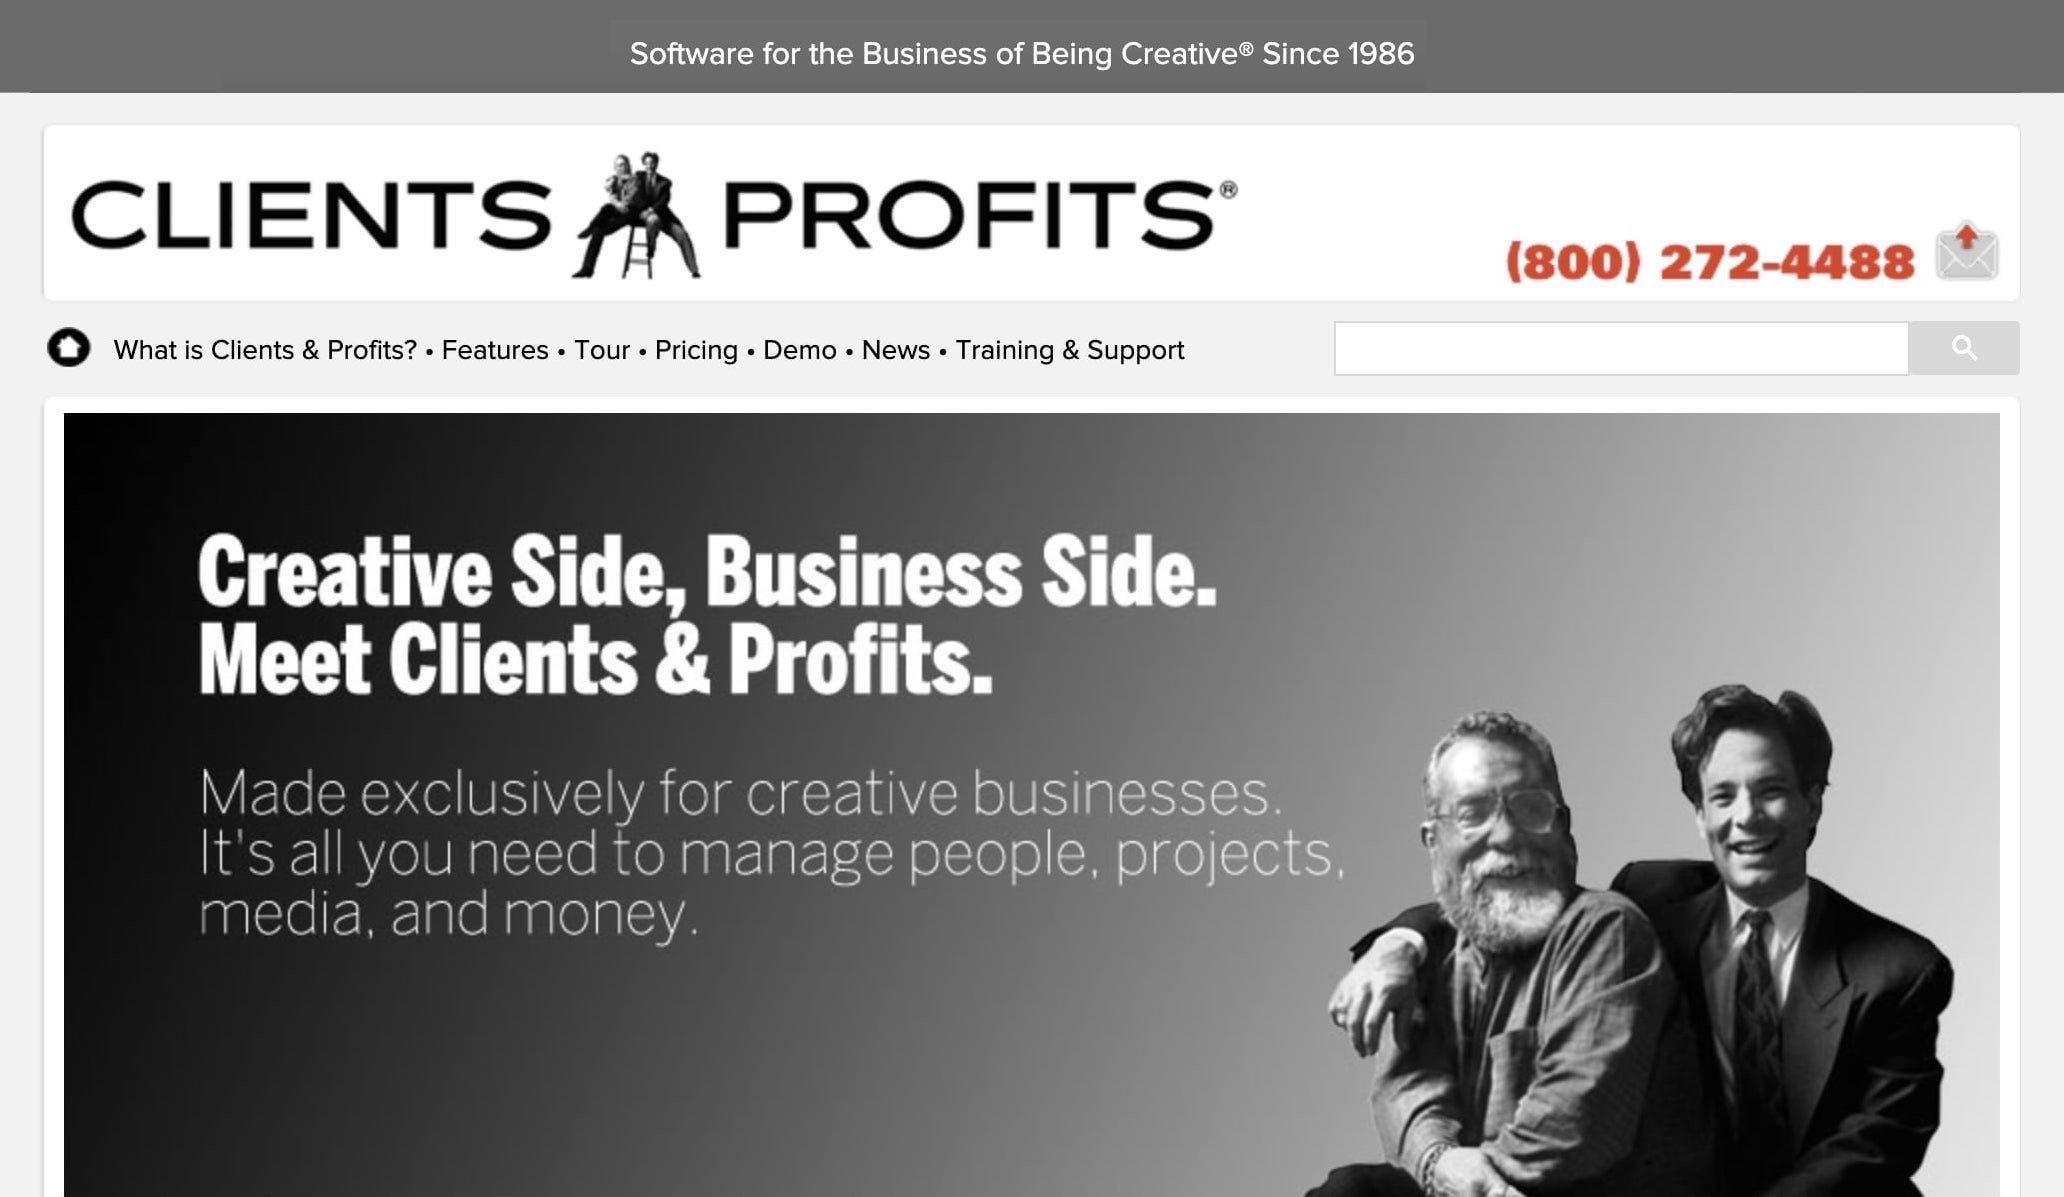 Clients & Profits homepage: Creative Side, Business Side. Meet Clients & Profits.